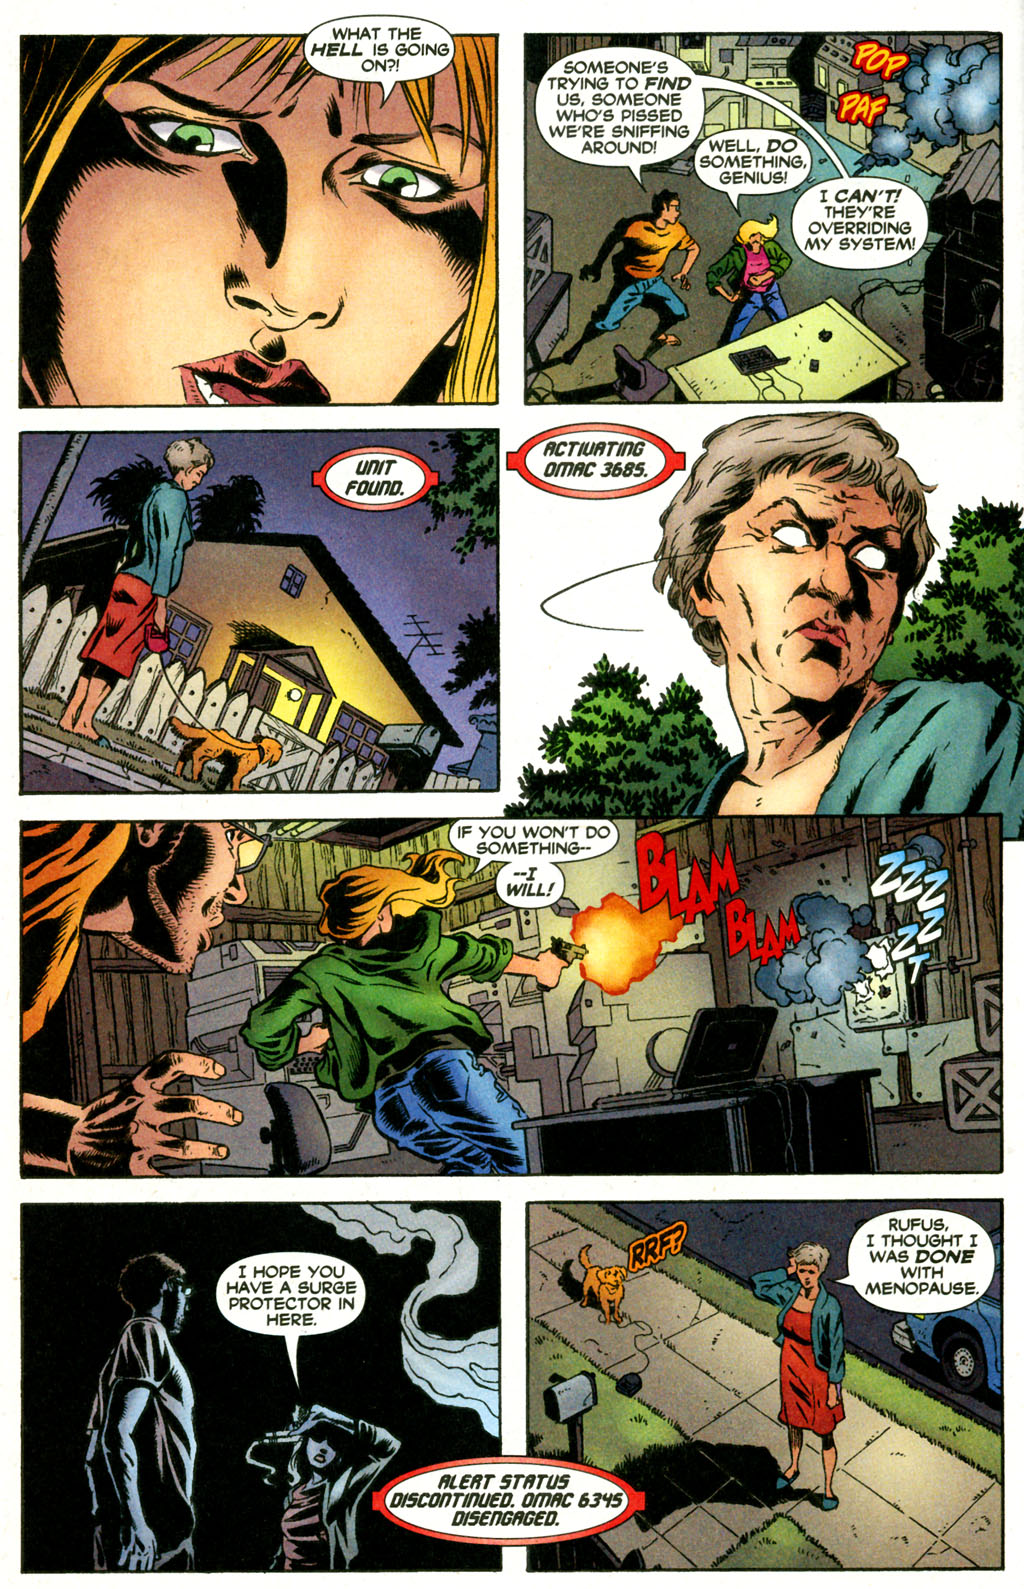 Manhunter (2004) issue 13 - Page 19